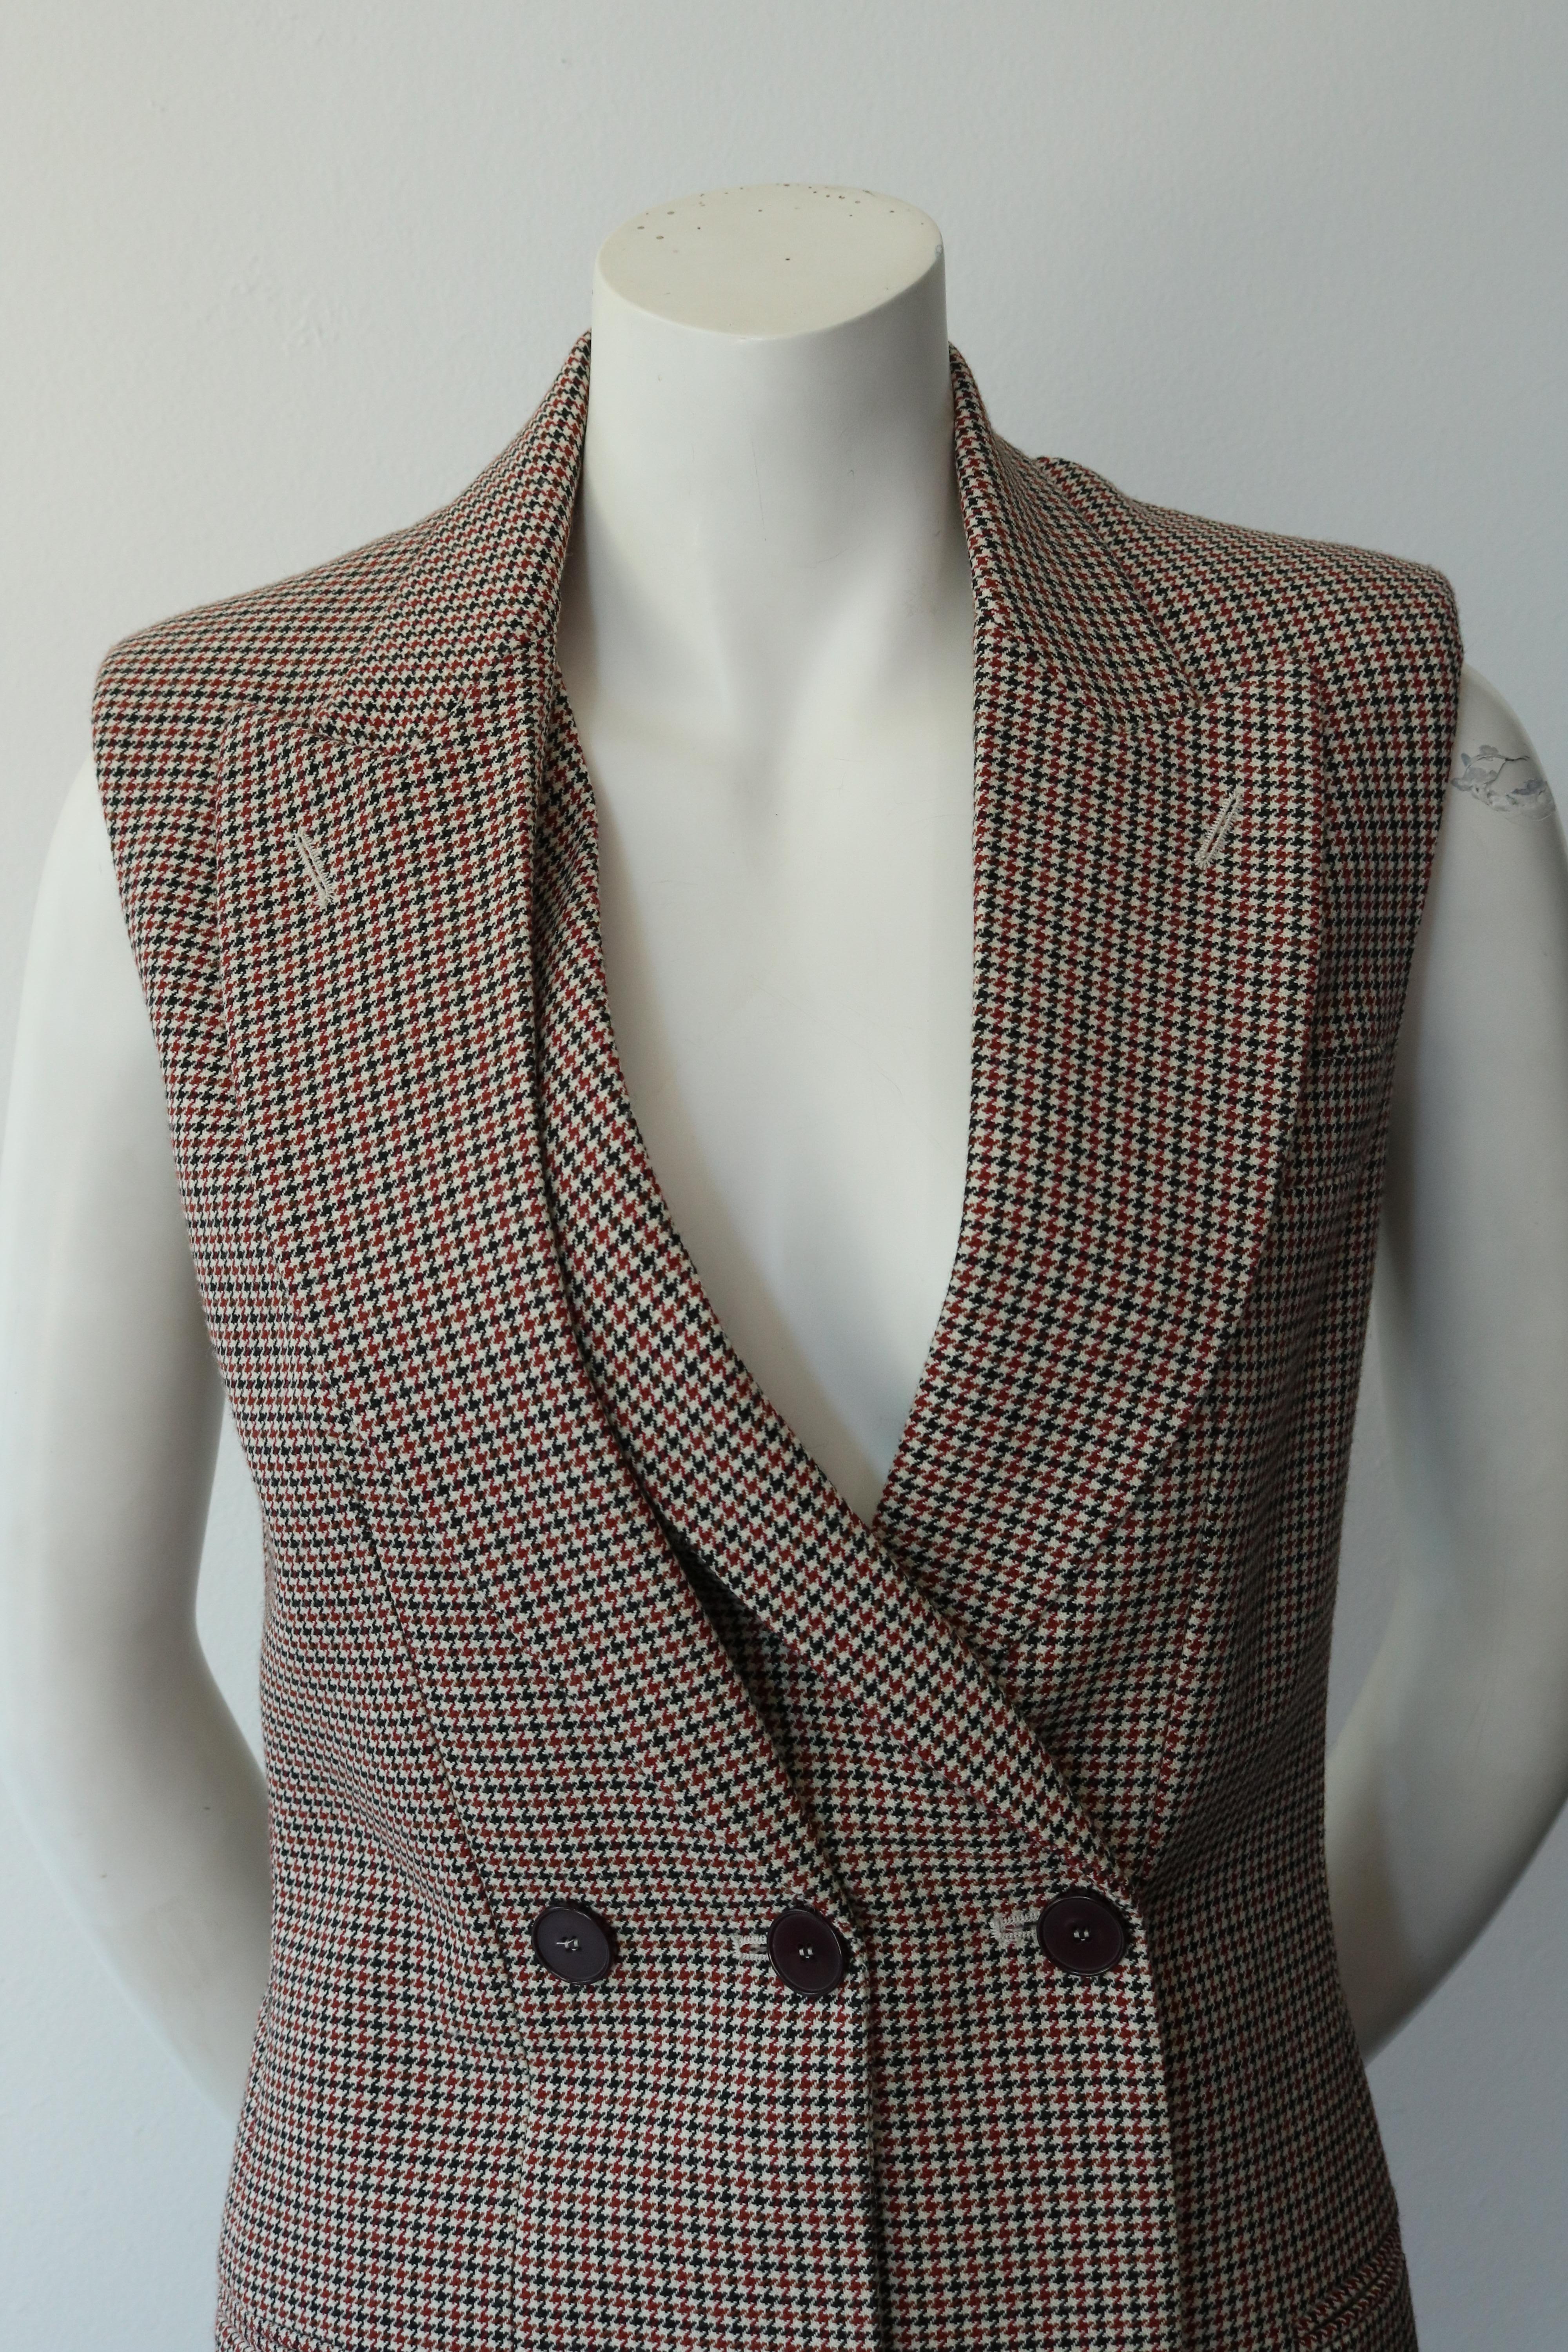 Stella McCartney Tweed Suit Dress  1